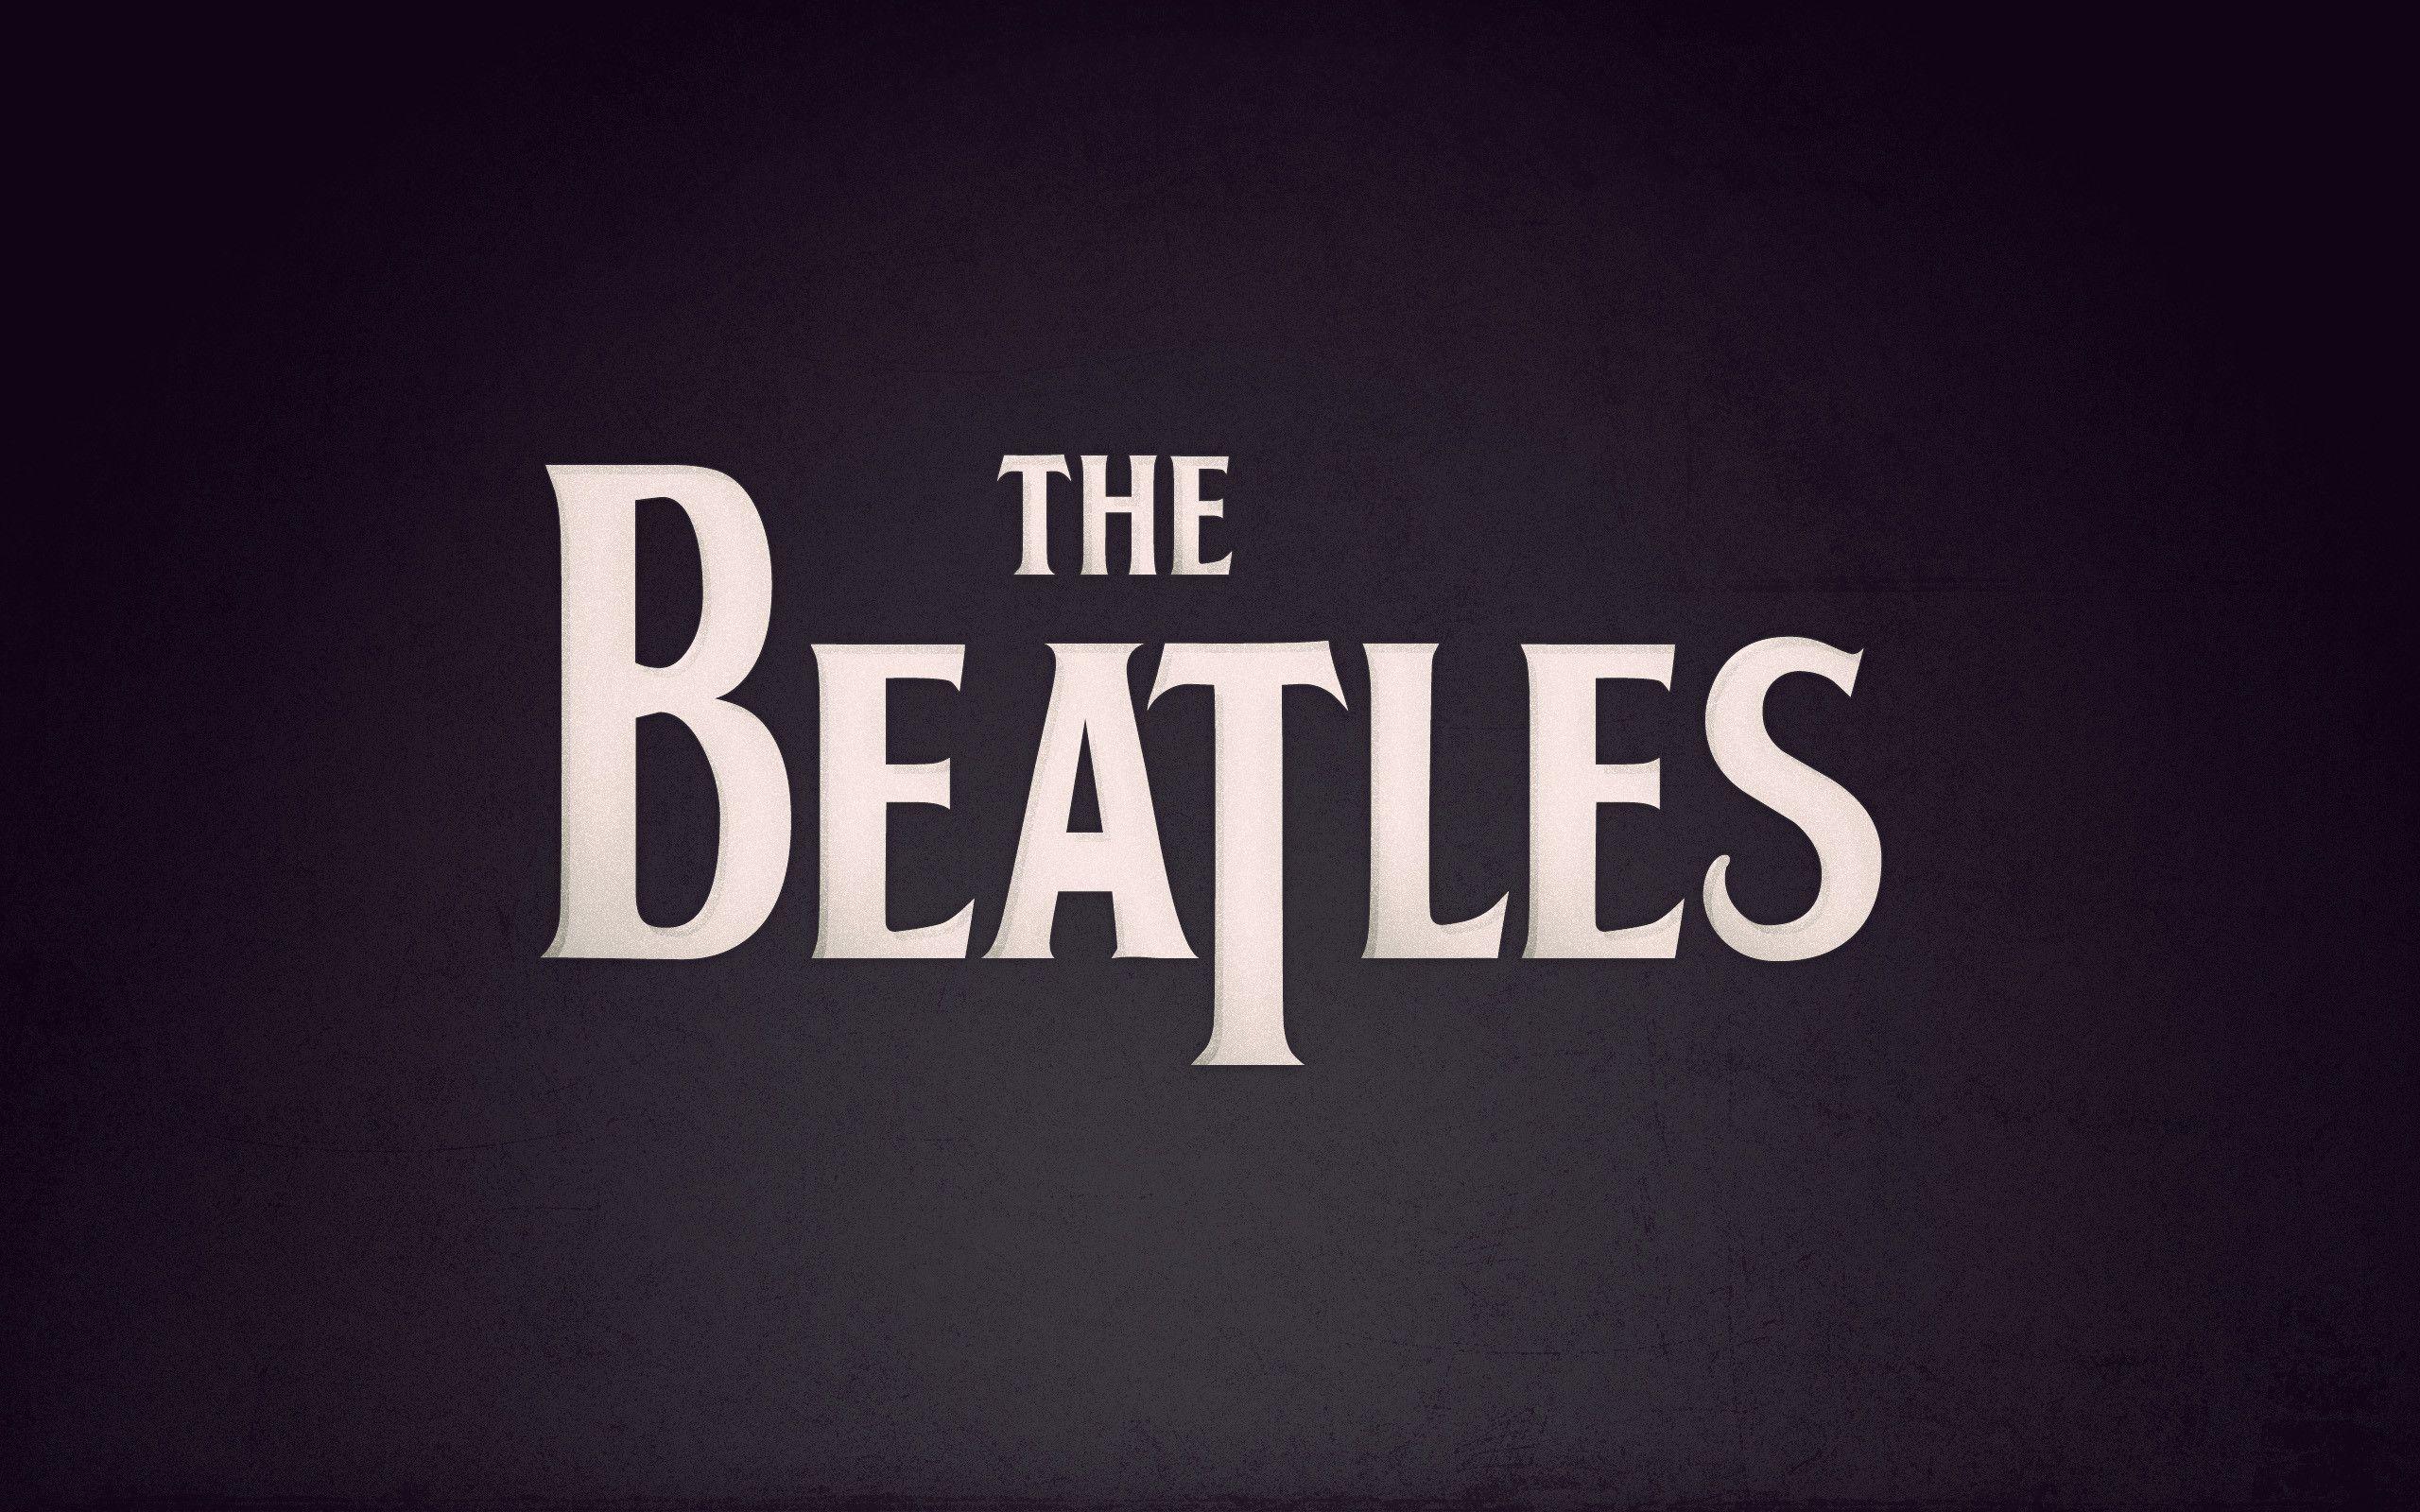 Beatles Wallpaper, The Beatles, the inscription, purple, rock